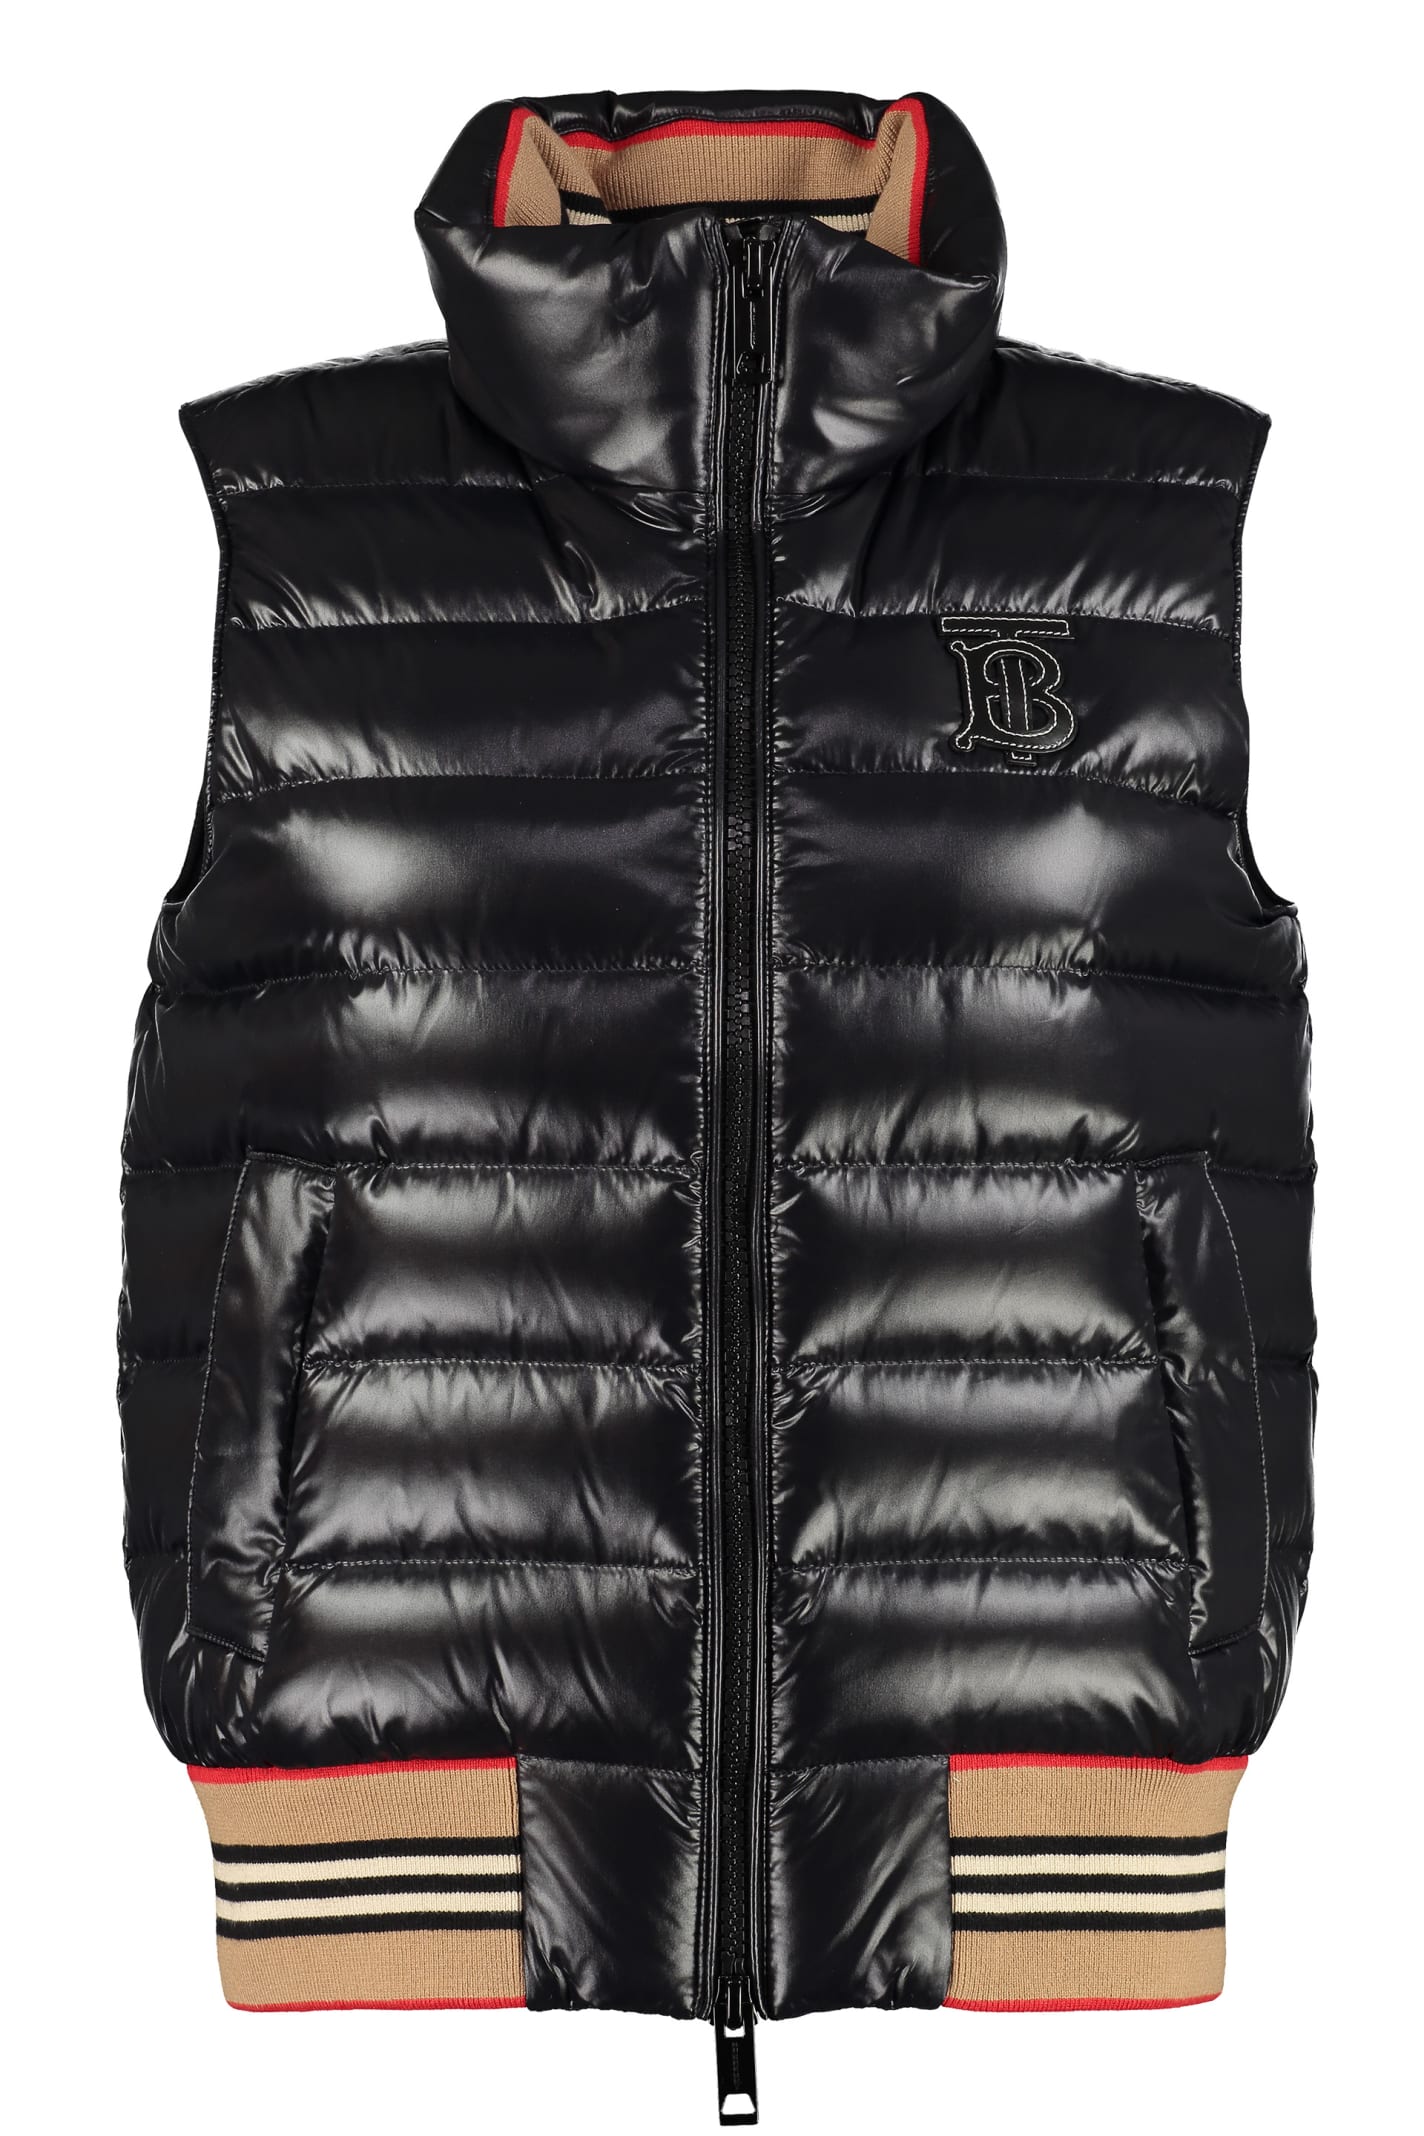 burberry vest black